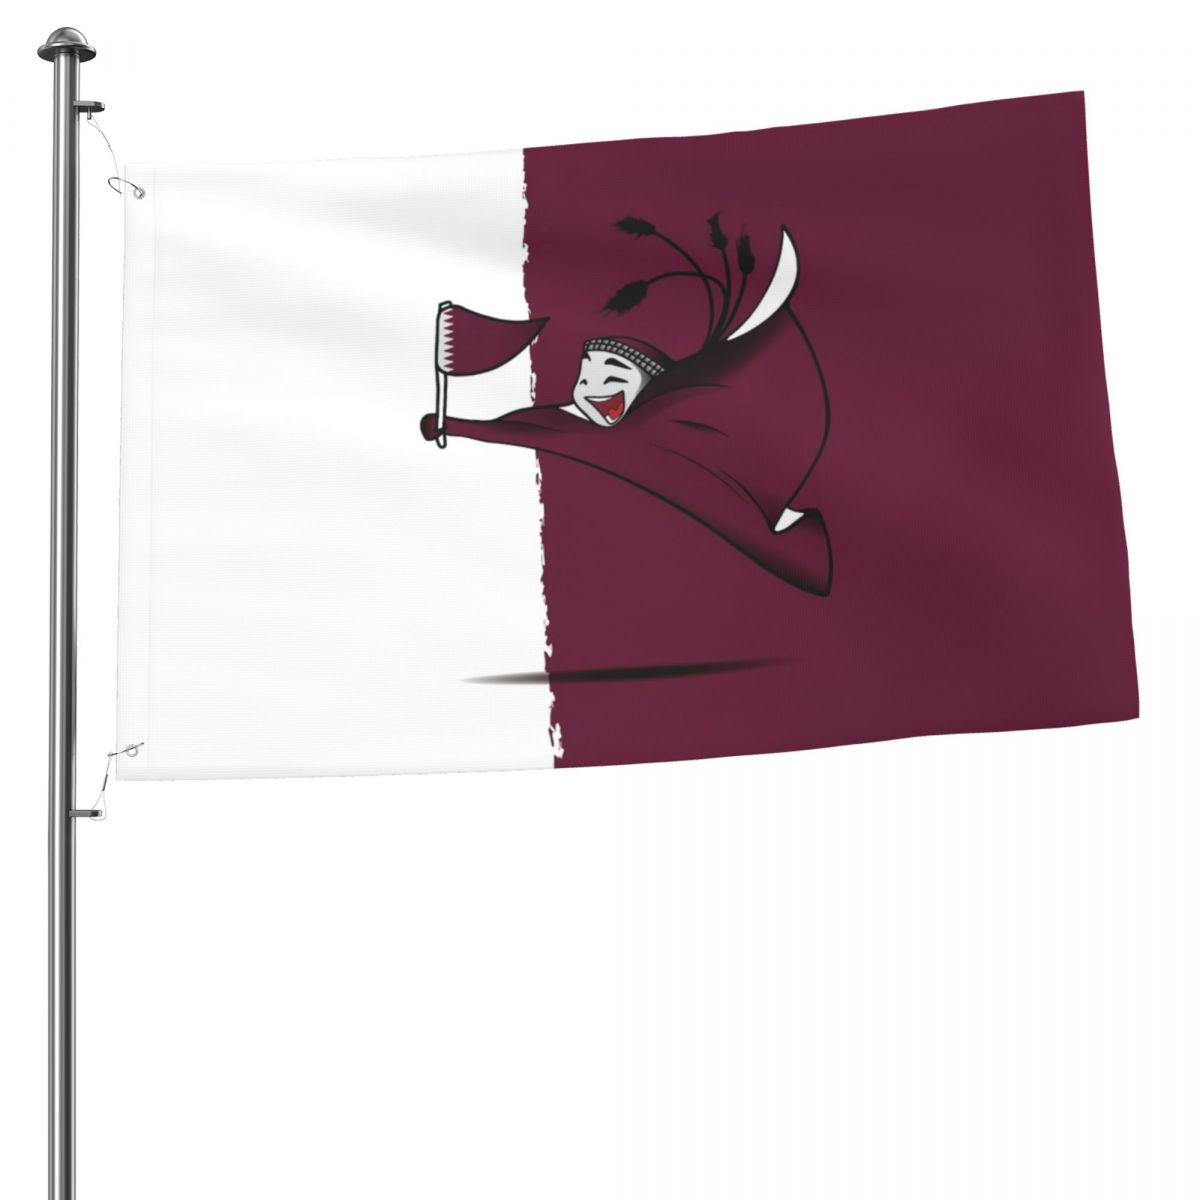 Qatar World Cup 2022 Mascot 2x3FT Flag